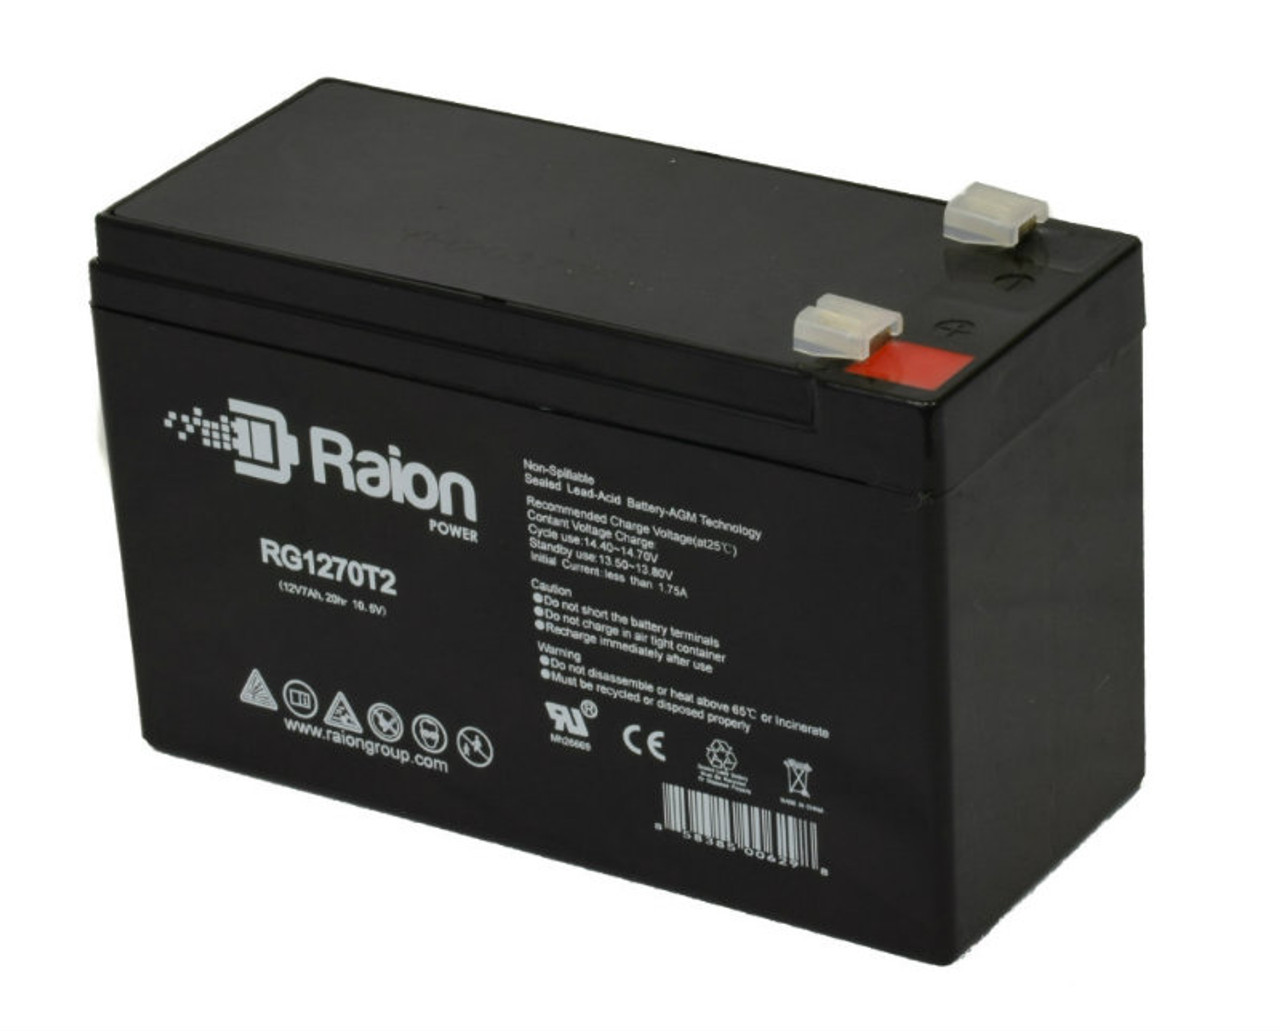 Raion Power RG1270T2 12V 7Ah Rechargeable Battery for RPower GIV1270V